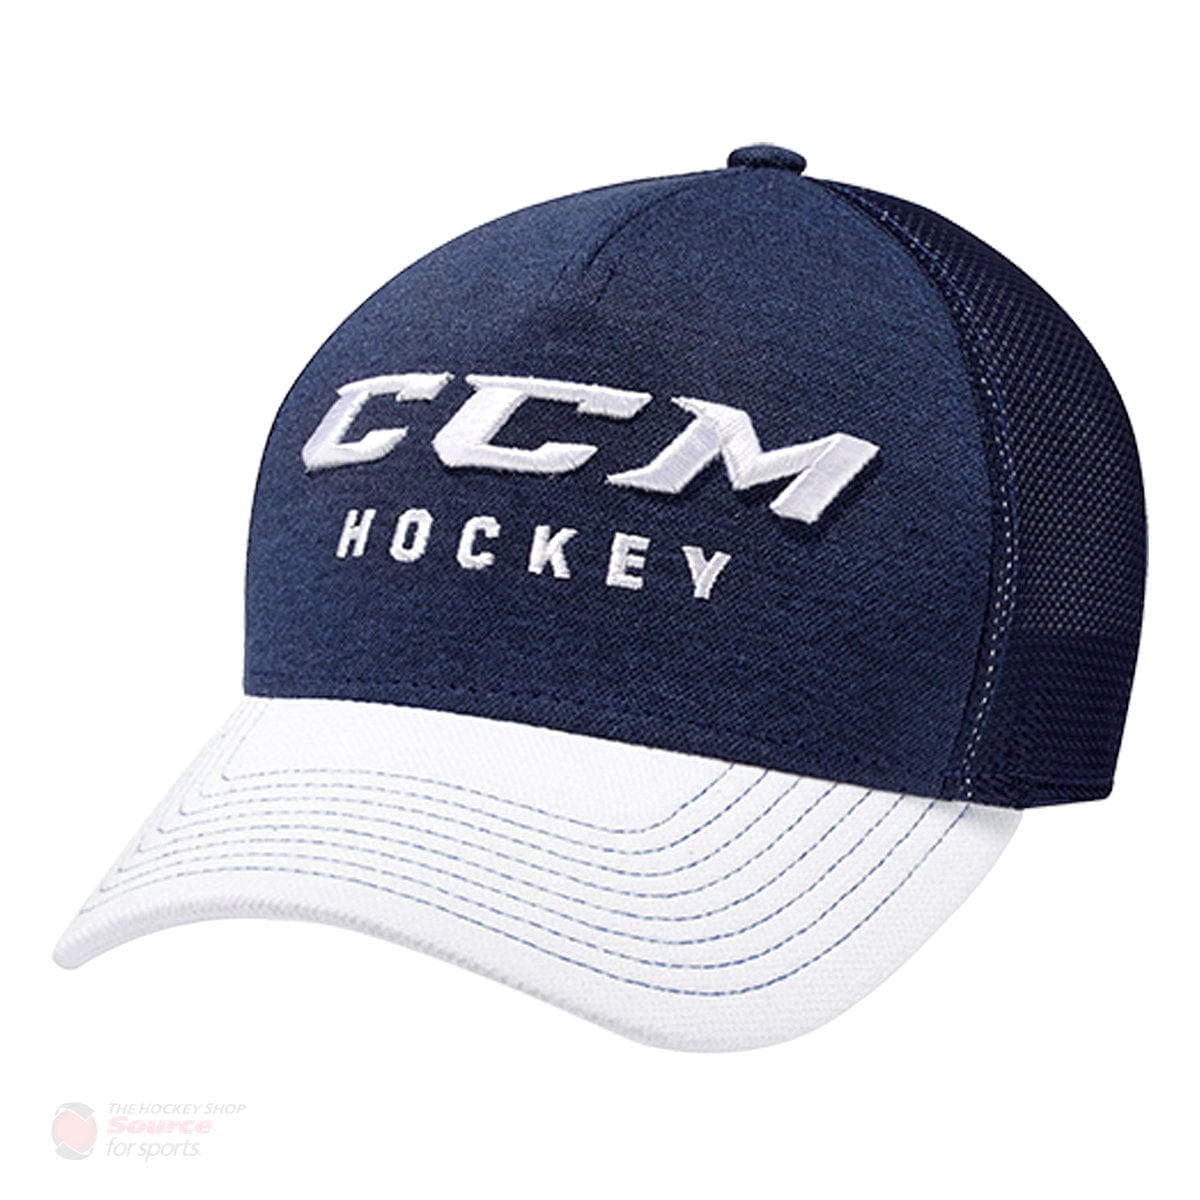 CCM True to Hockey Snapback Hat